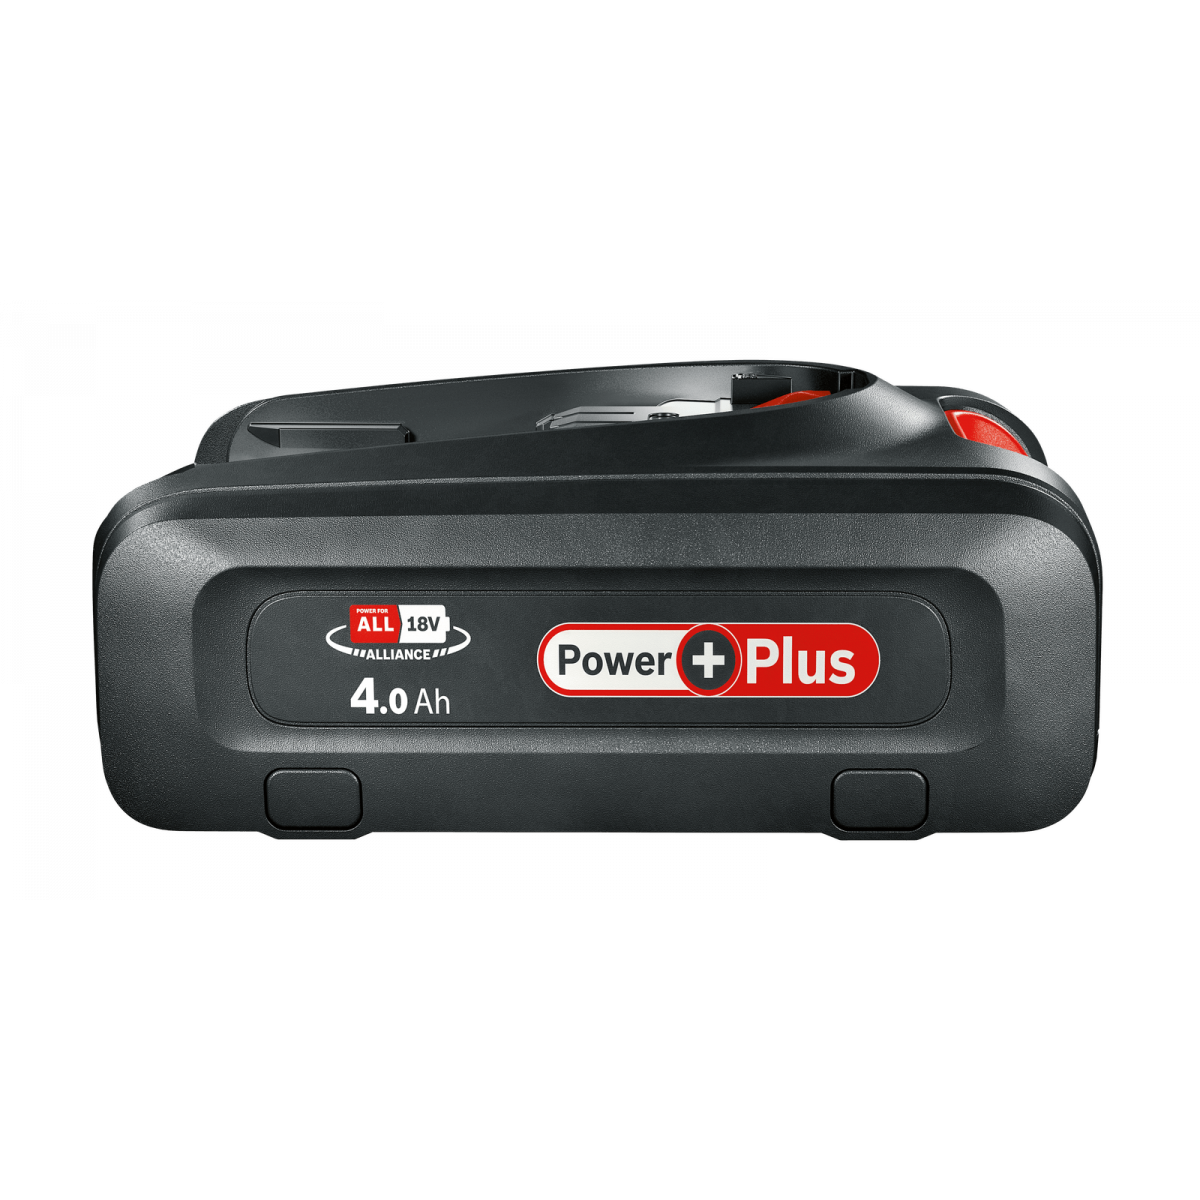 Bosch Batterie PBA 18V 6.0Ah W-C (1600A00DD7)